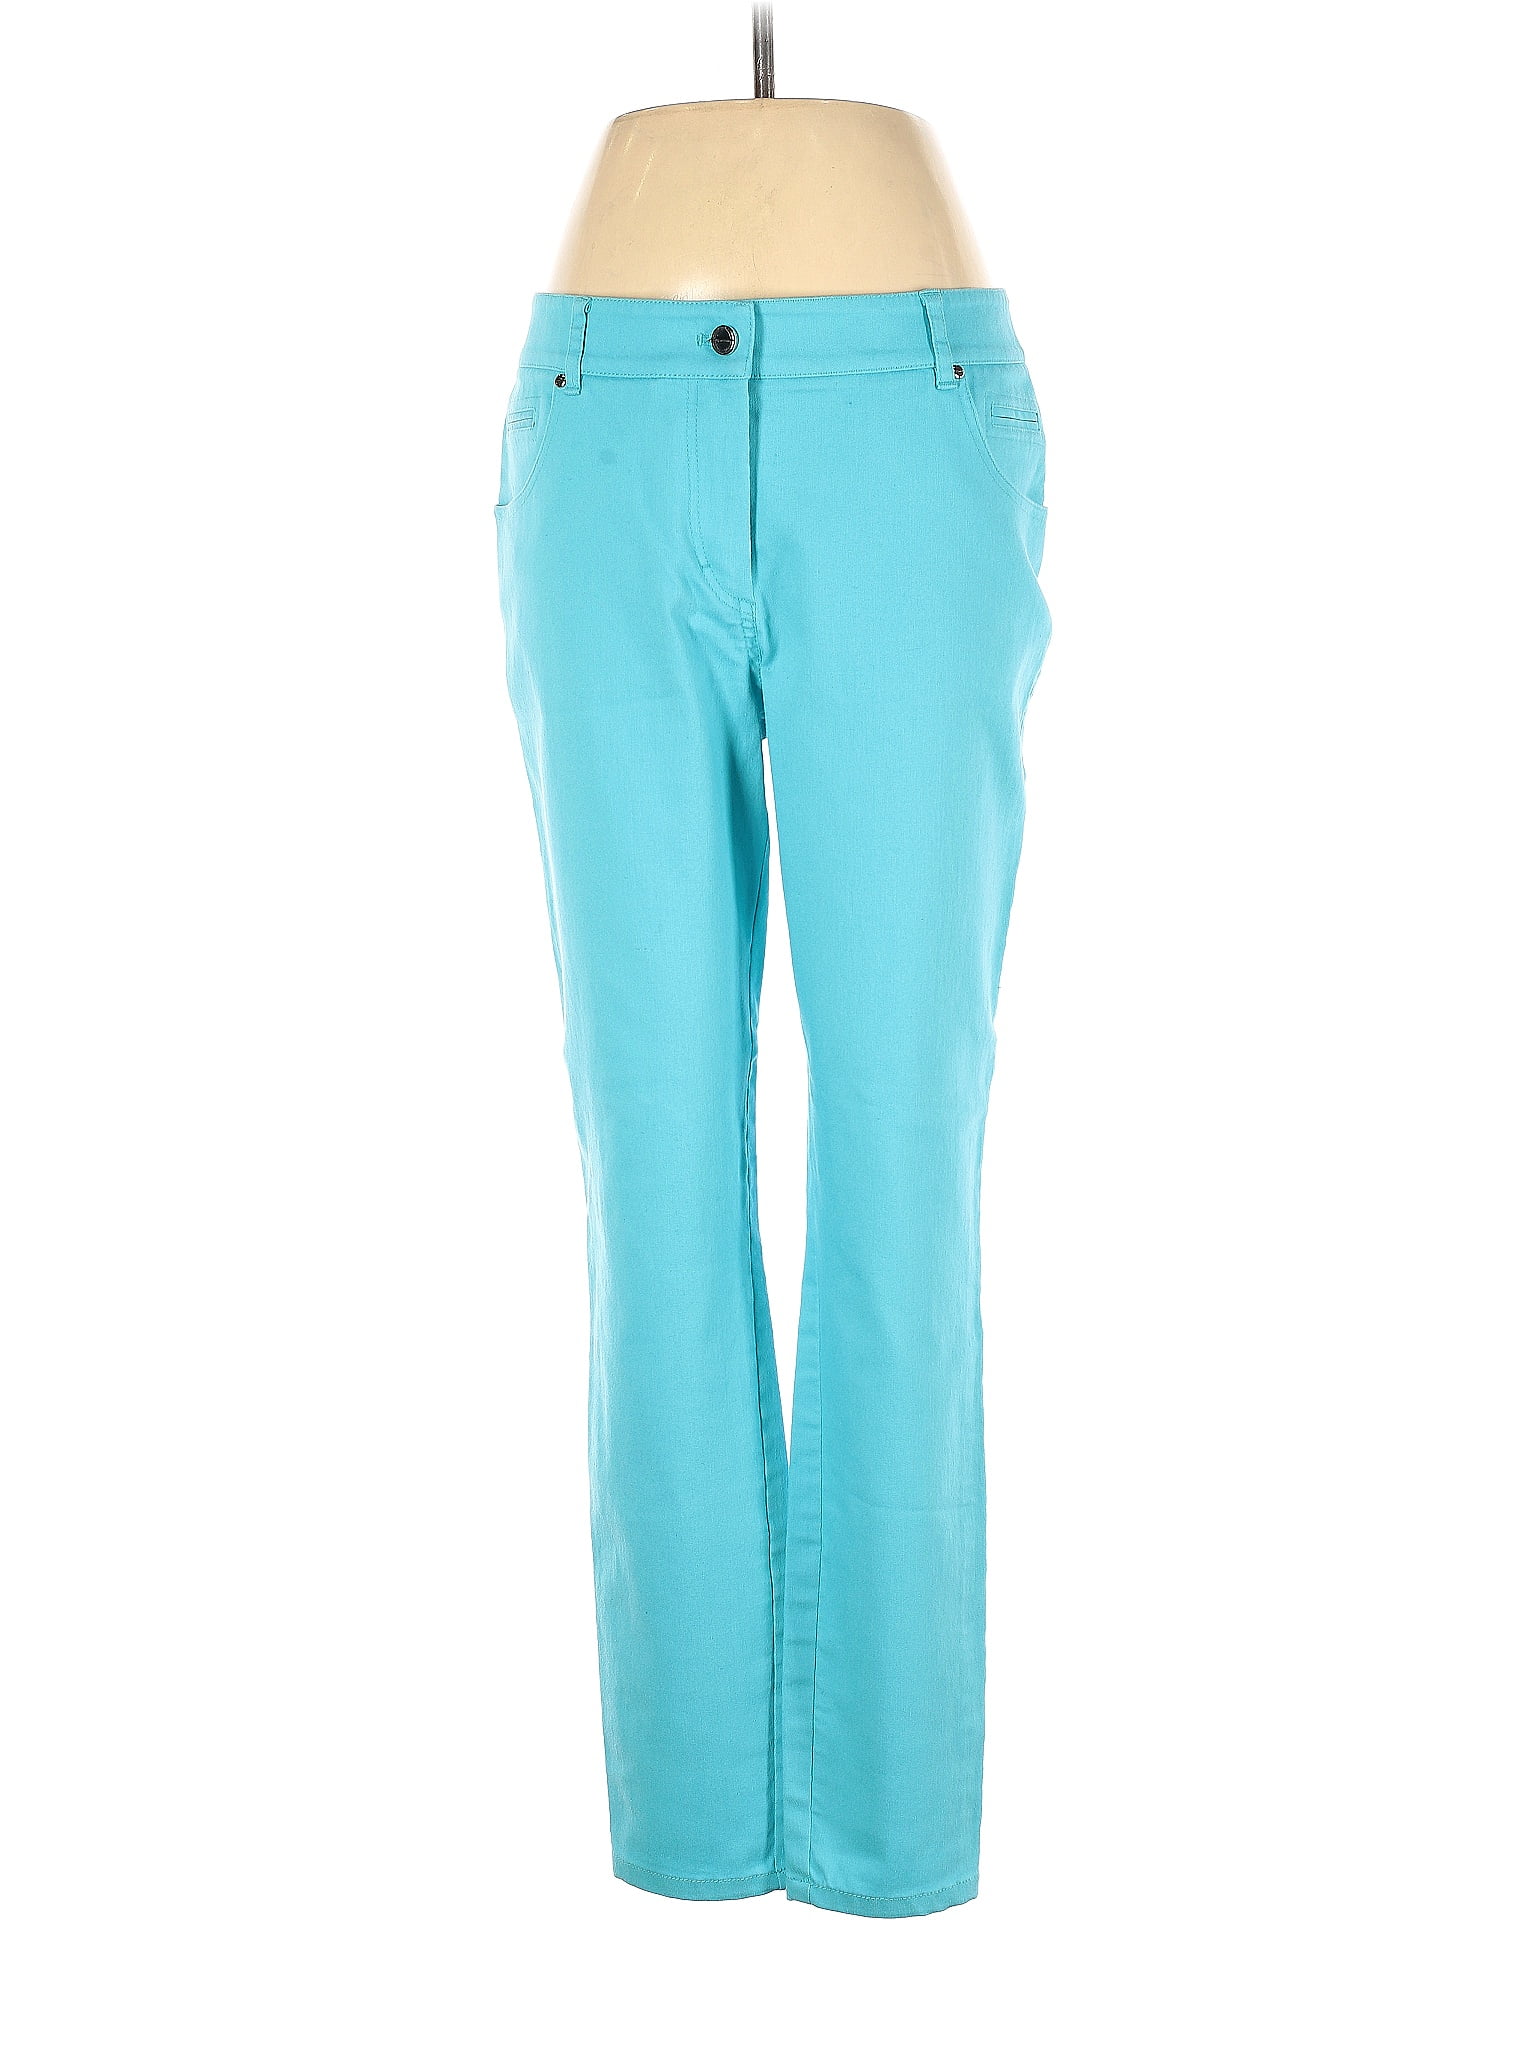 Per Se By Carlisle Blue Jeans Size 8 - 81% off | thredUP